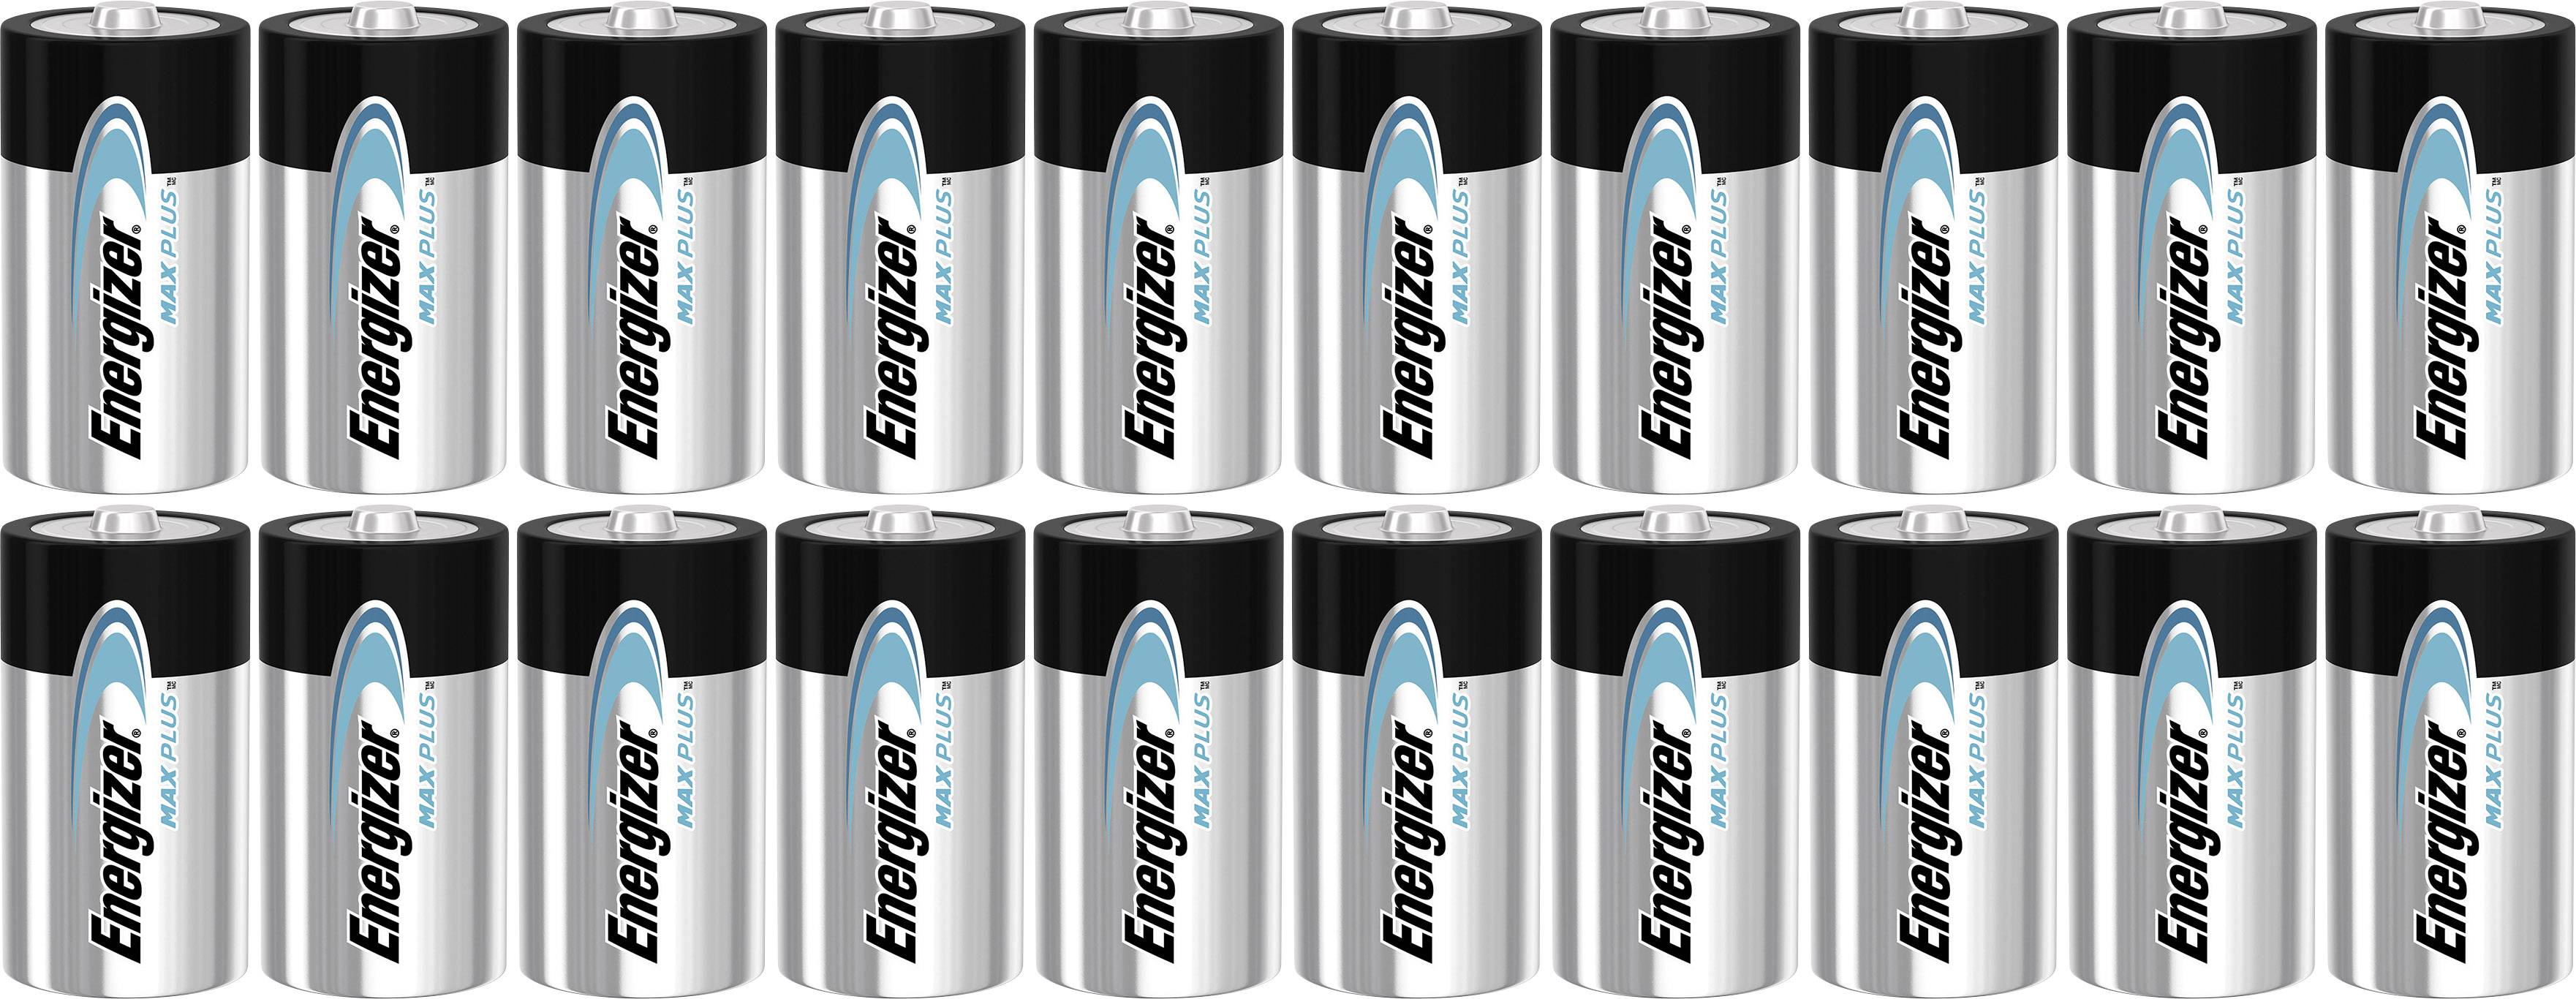 ENERGIZER Baby (C)-Batterie Alkali-Mangan Max Plus Industrial 1.5 V 20 Stück (E301324100)